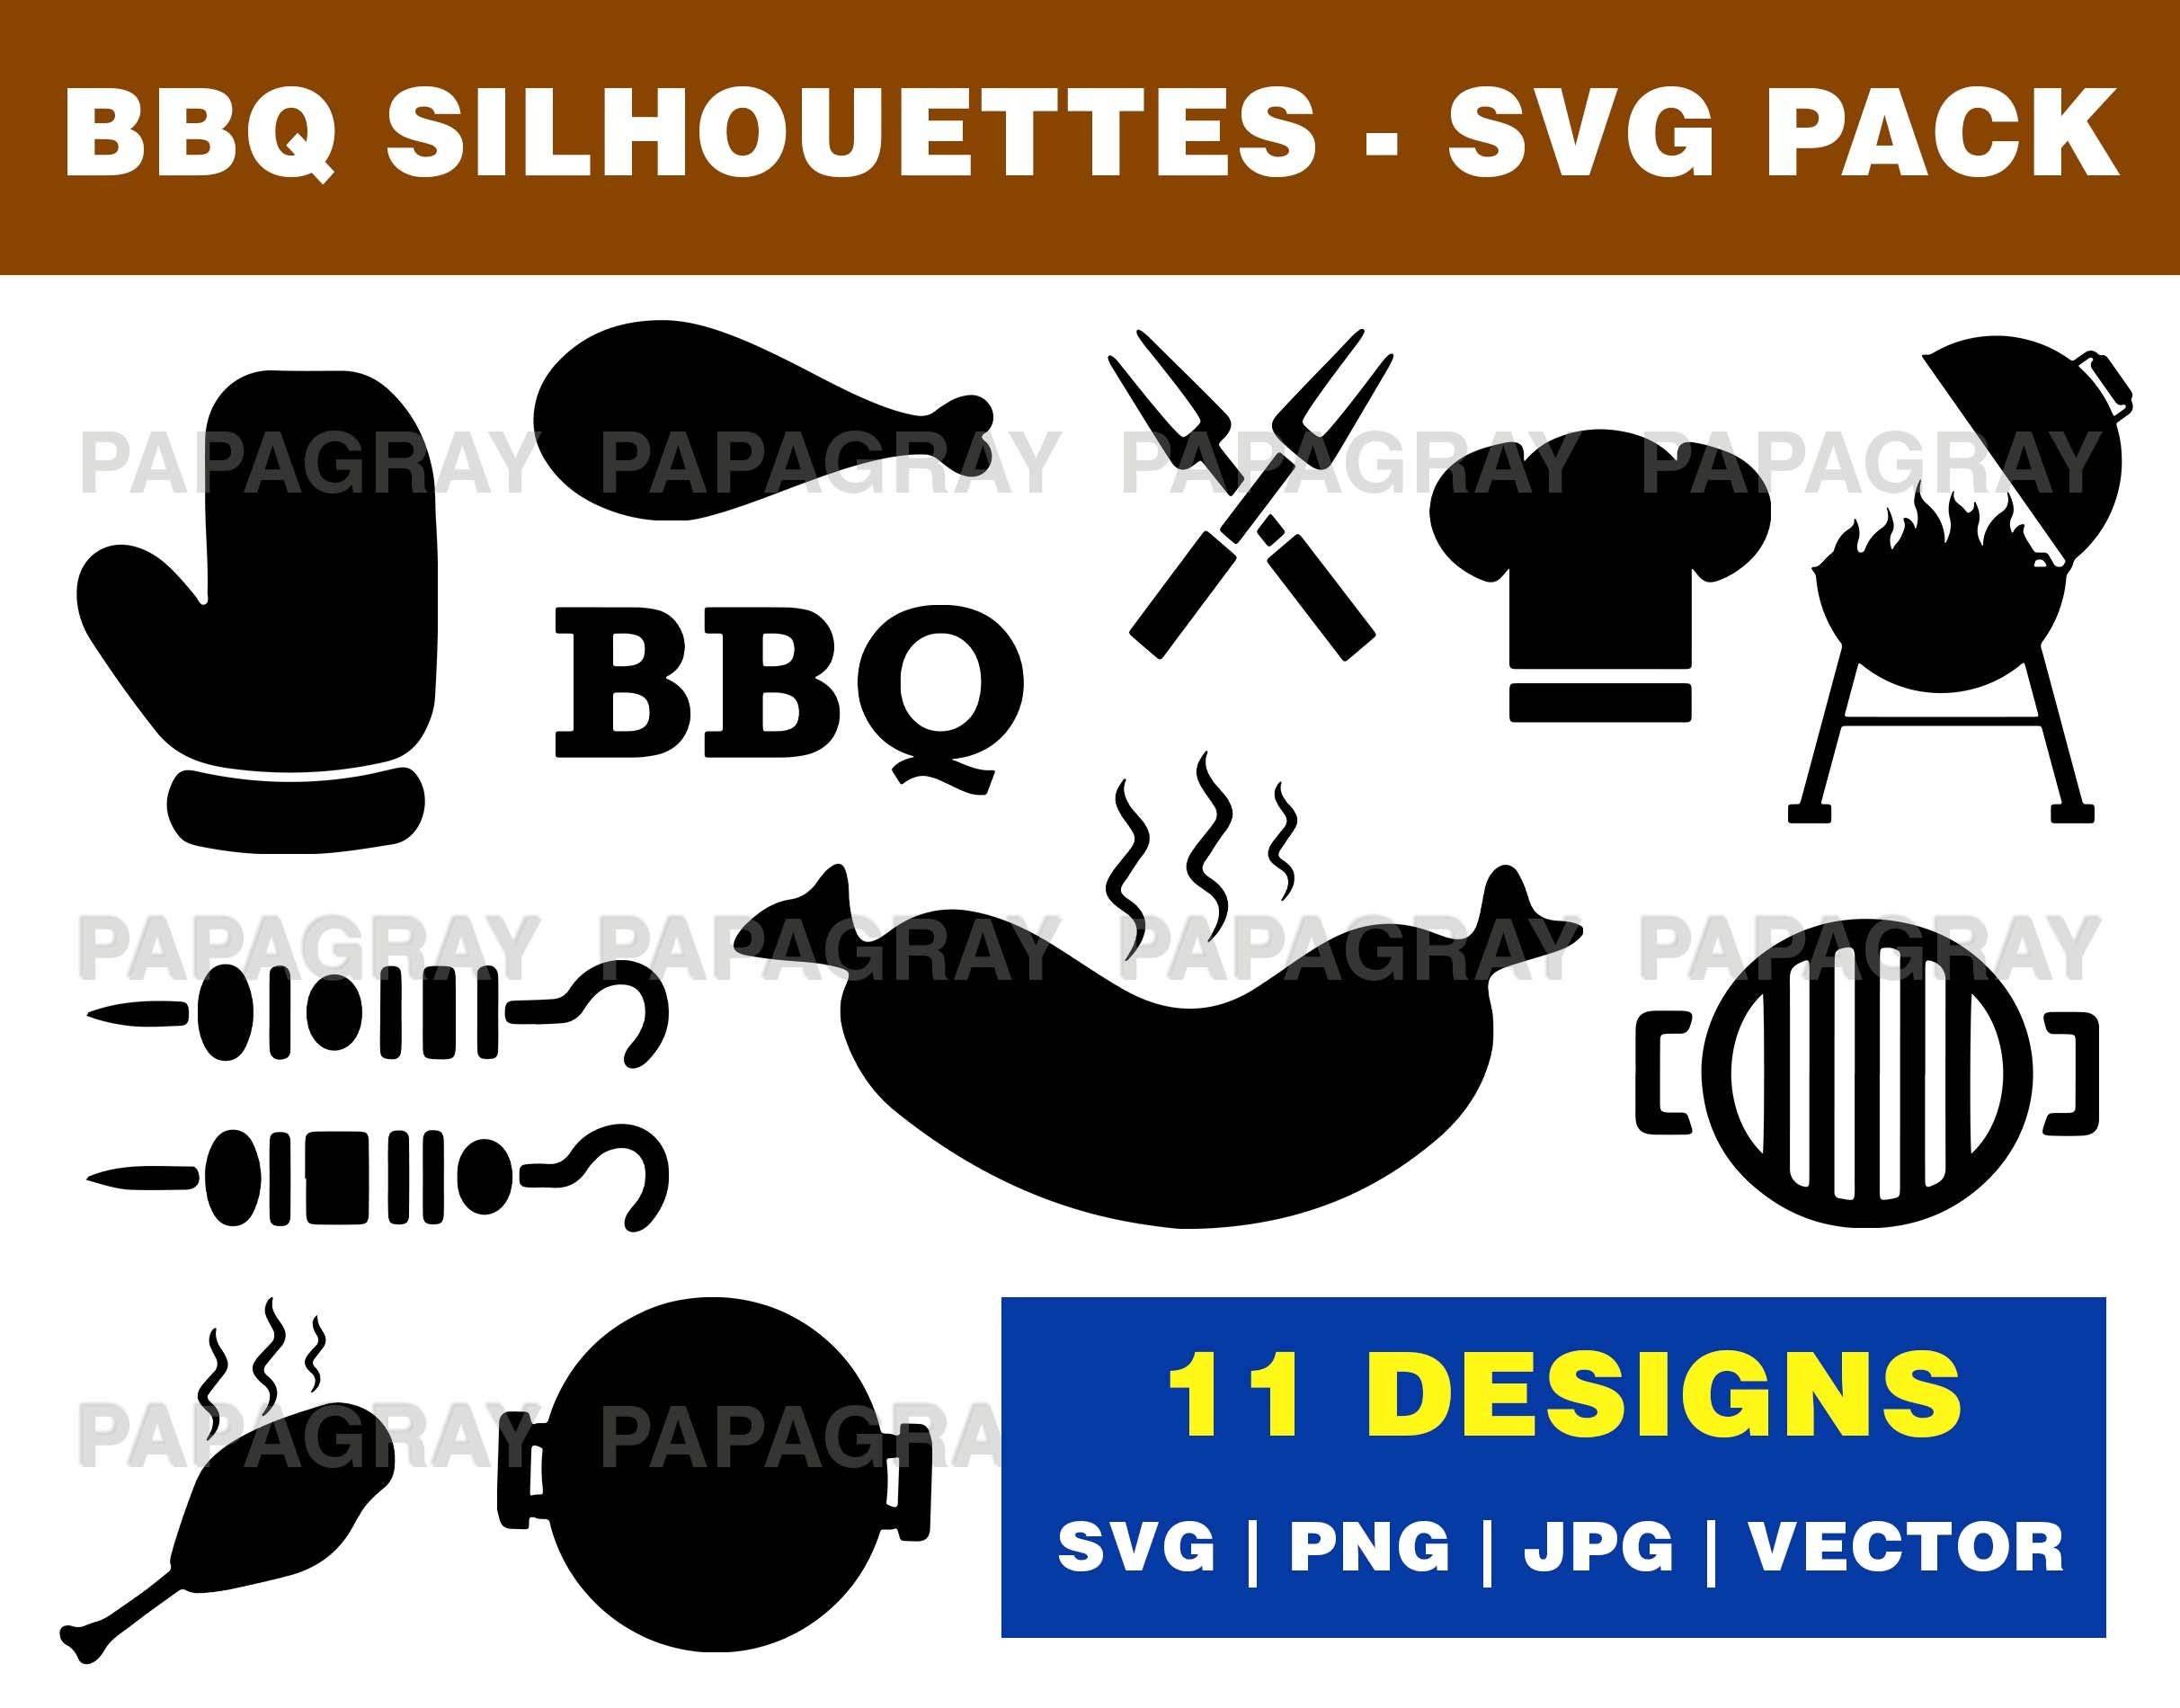 Papas Barbecue Downloadable SVG File